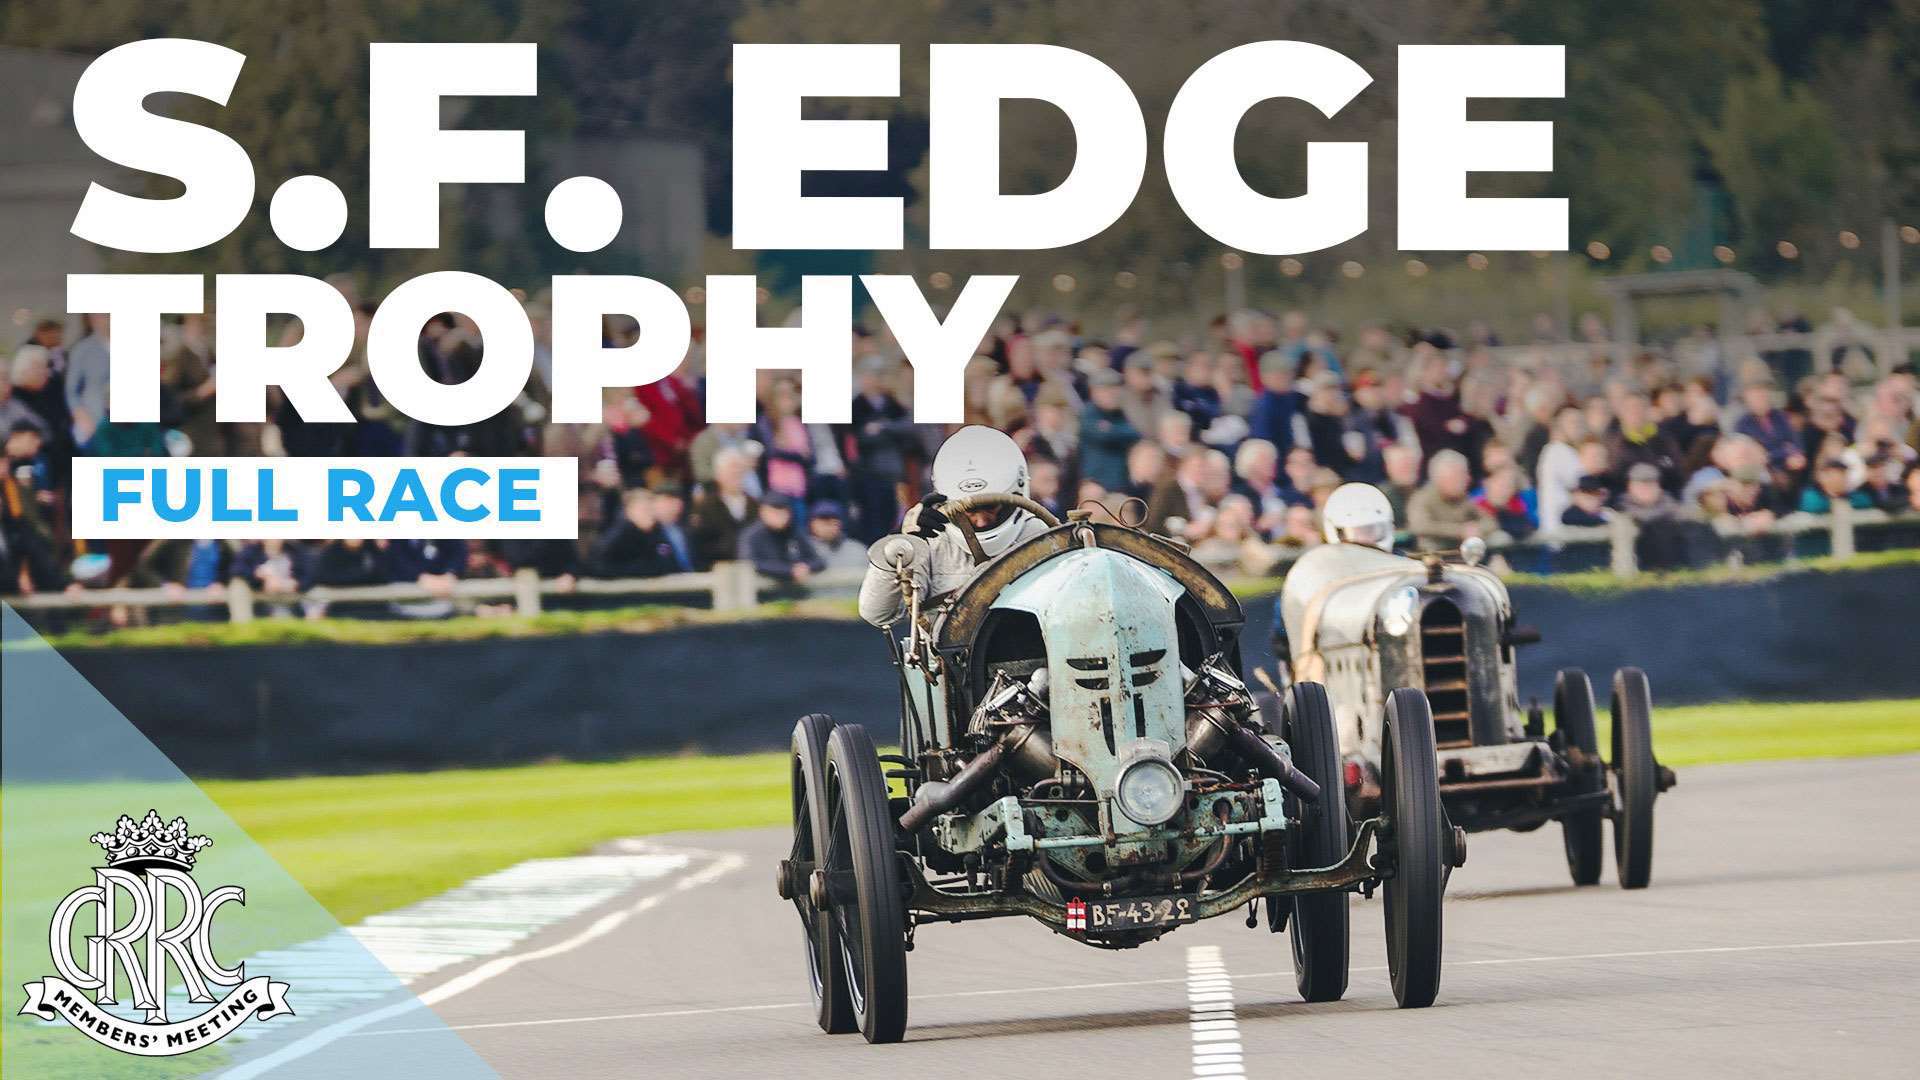 race-3-sf-edge-trophy-part-1-full-race-78mm-joe-harding-goodwood-19102021.jpg